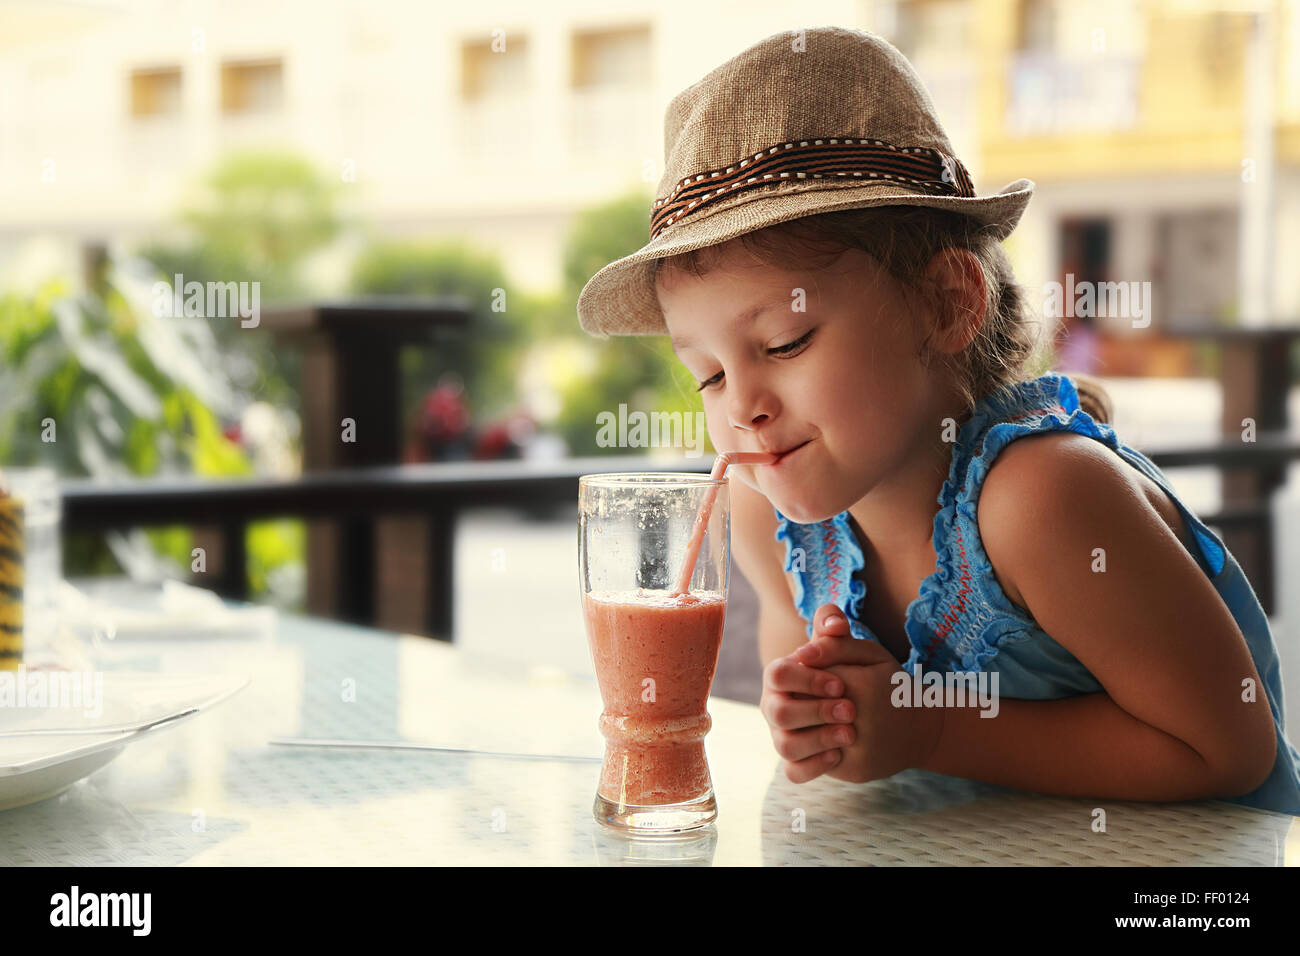 Cute thinking kid girl drinking tasty juice in street restaurant Stock Photo